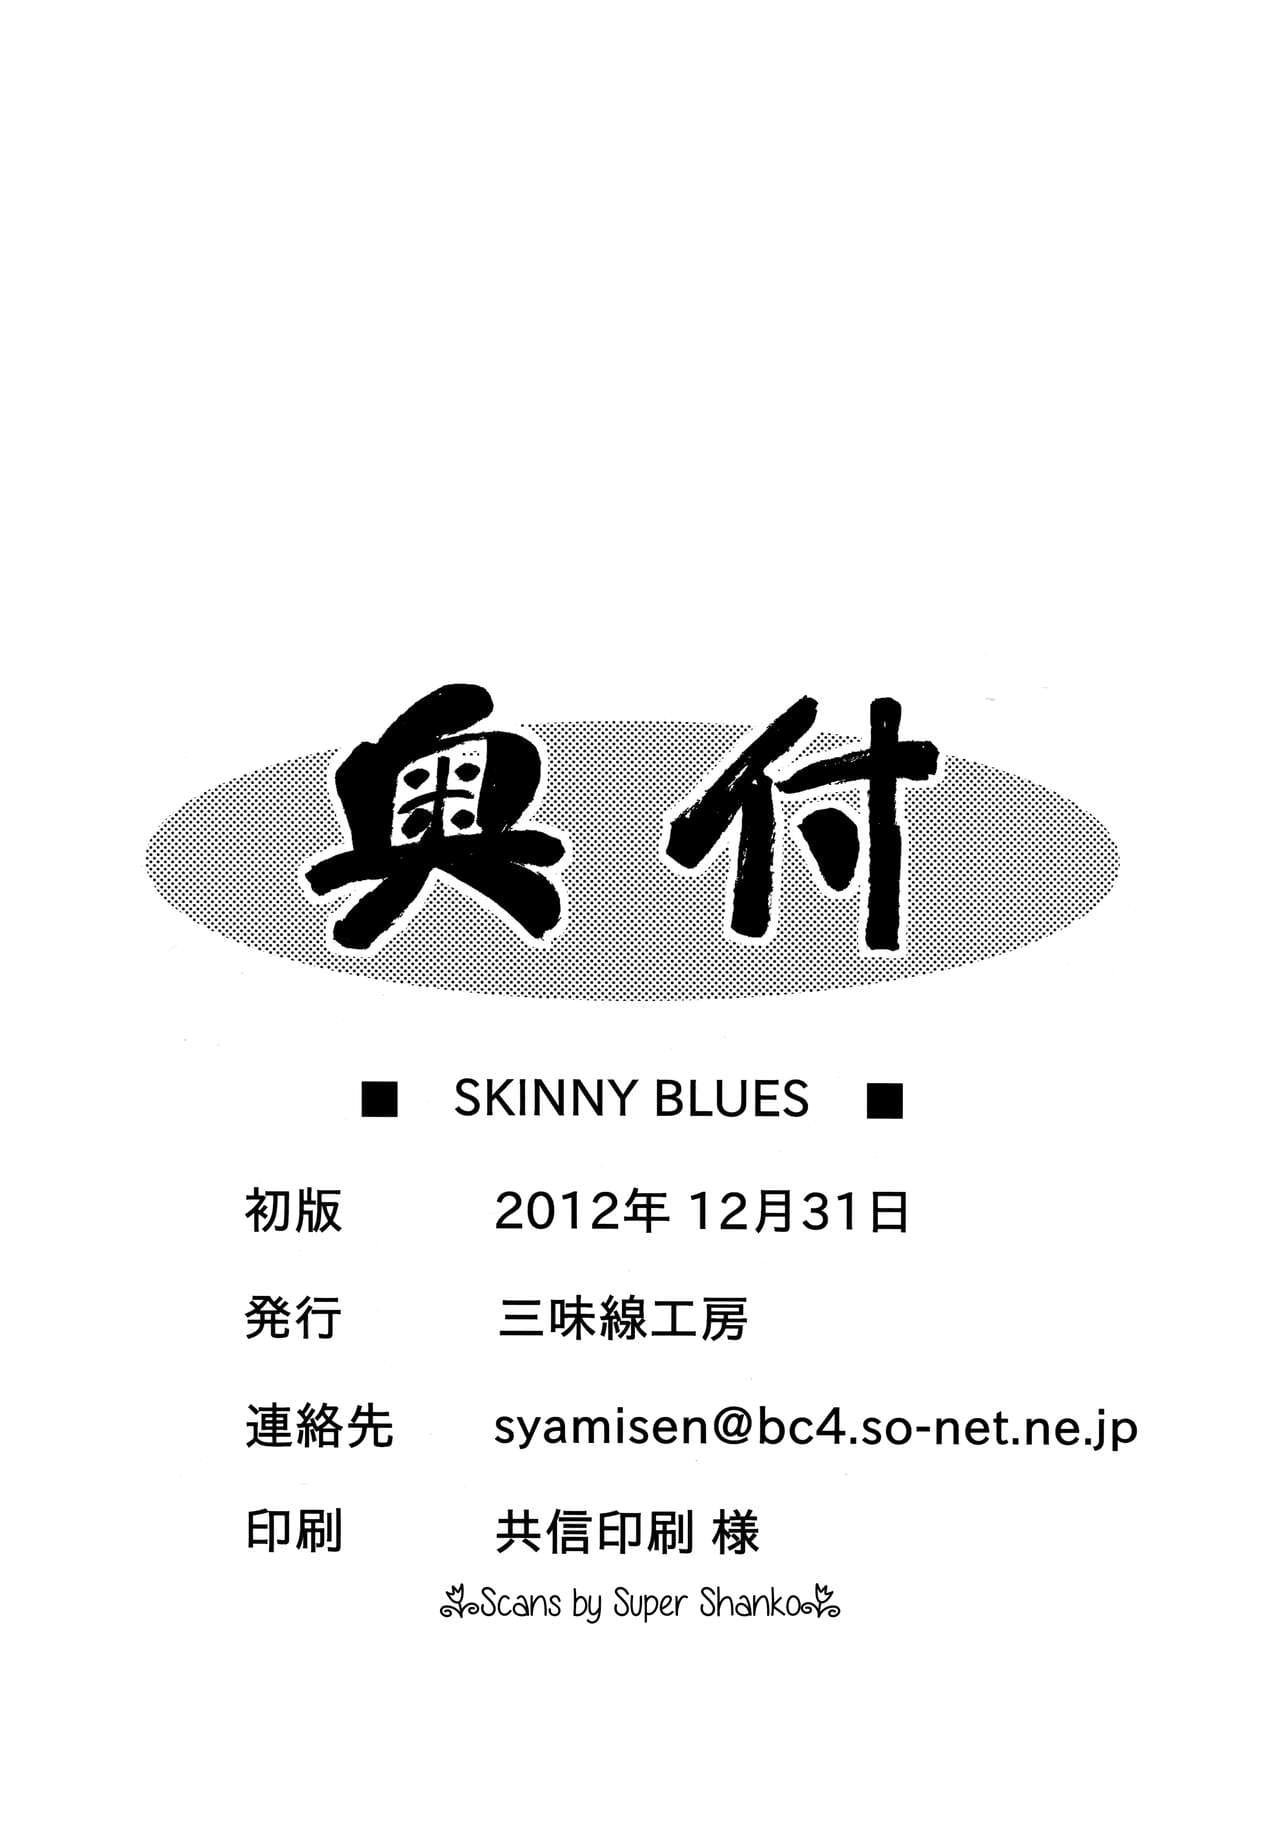 SKINNY BLUES - 20